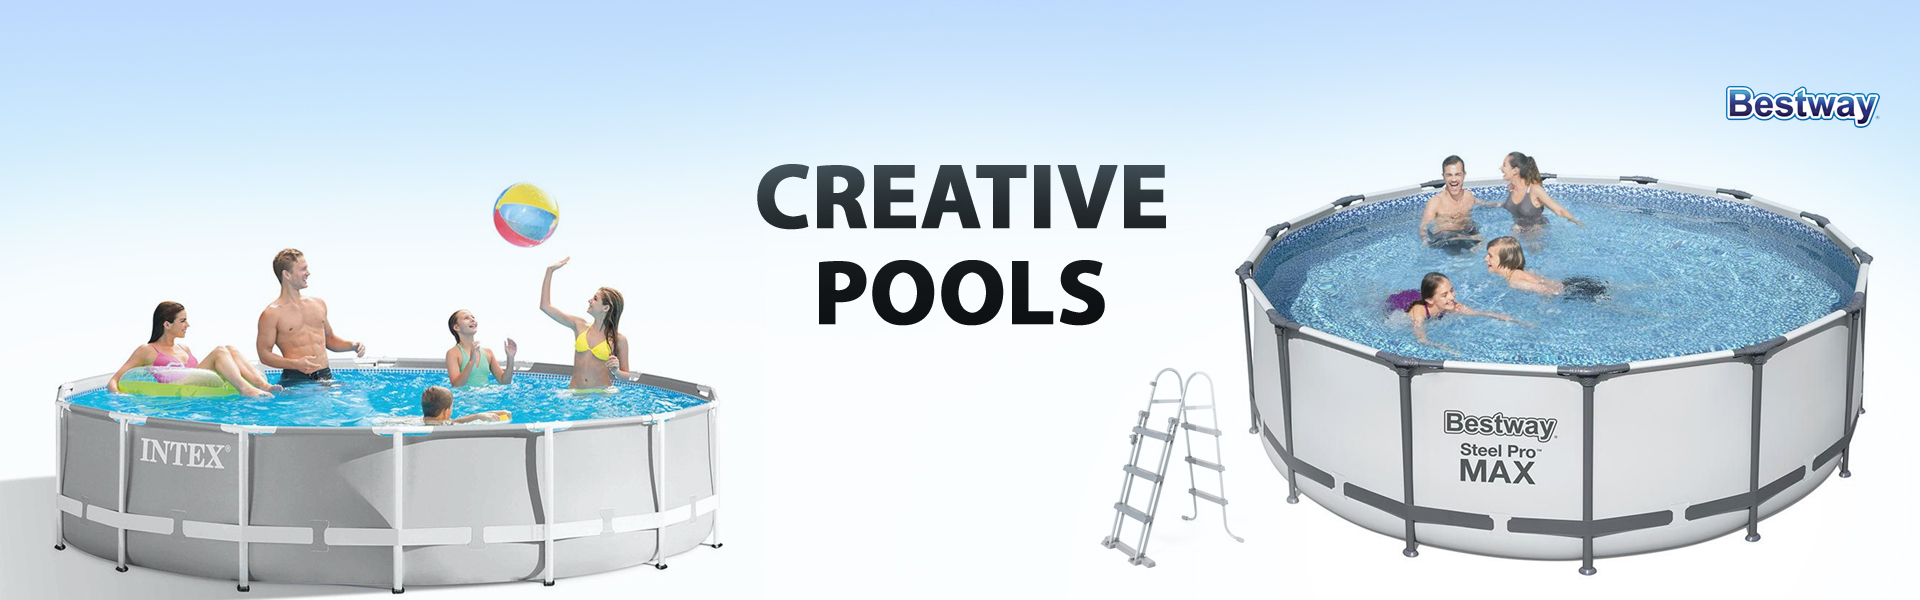 creative swimming pools Bestway Intex